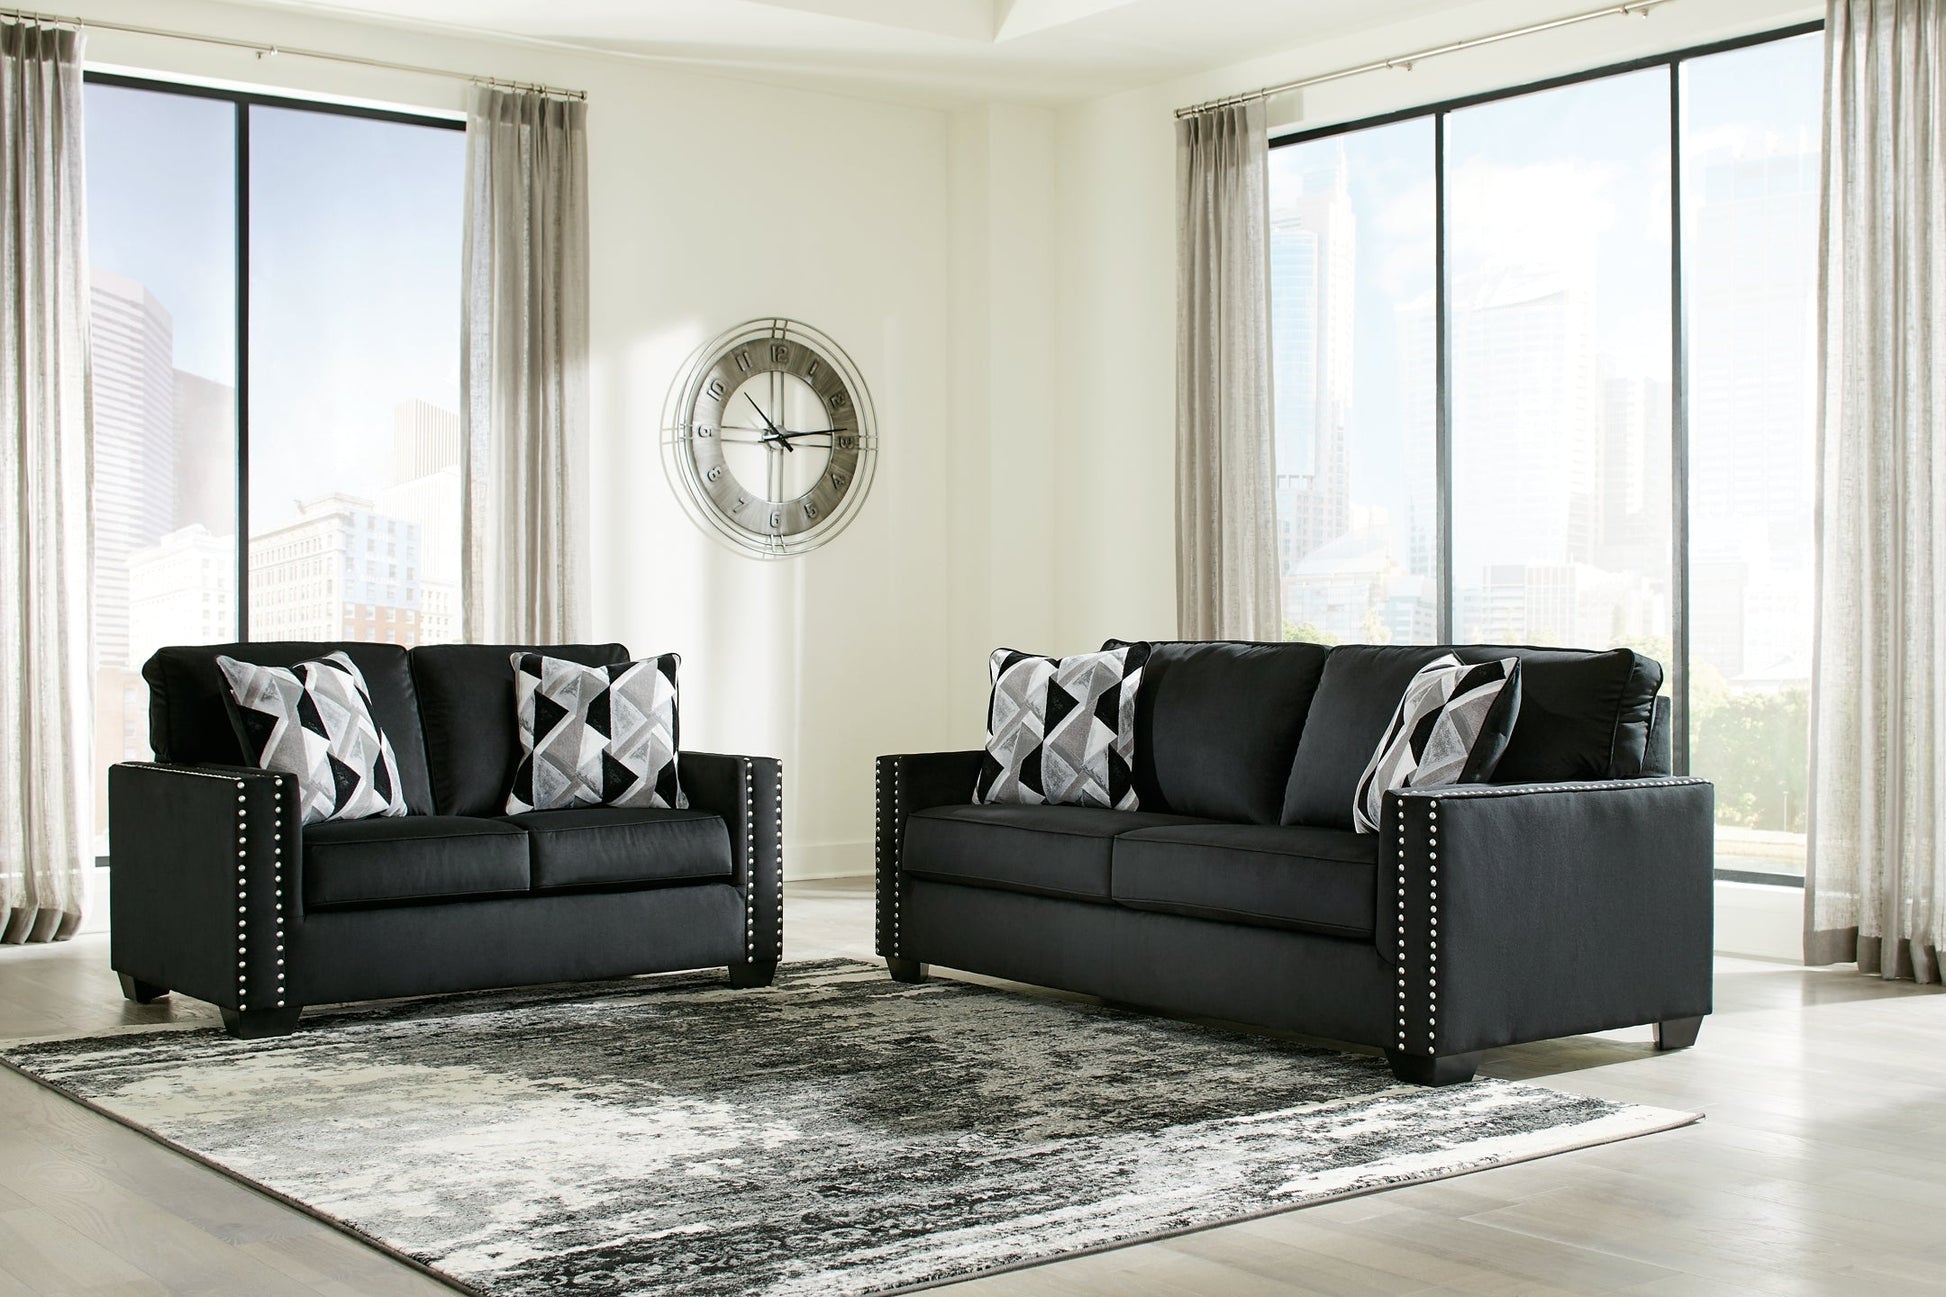 Gleston Sofa, Loveseat, Chair and Ottoman at Cloud 9 Mattress & Furniture furniture, home furnishing, home decor